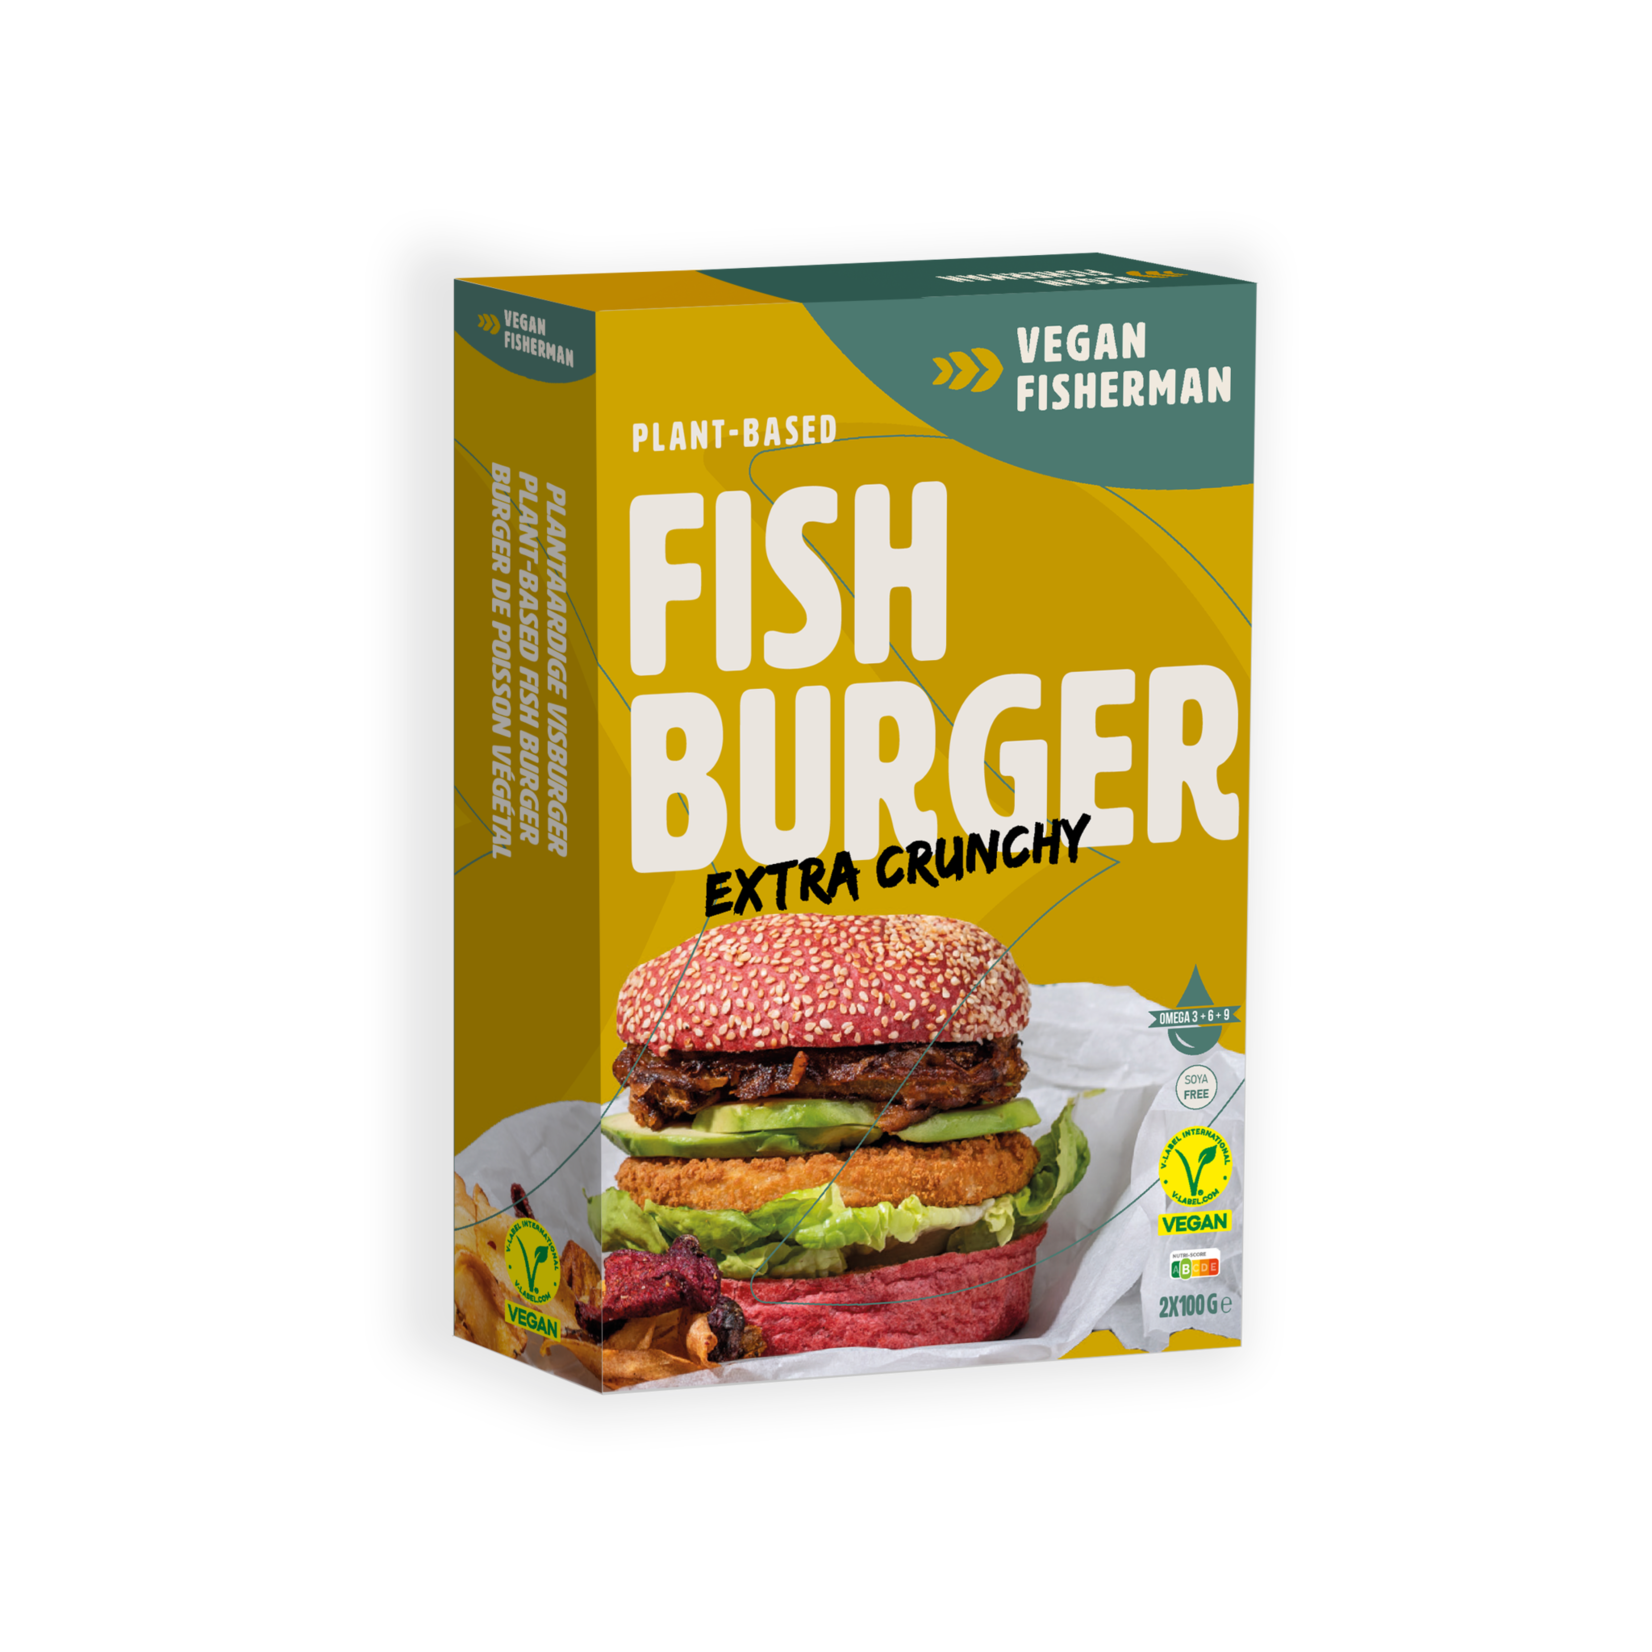 Vegan Visboer - Vegan Fisherman Family box: 4x Burgers 100 gr and 4x Fish Filet,